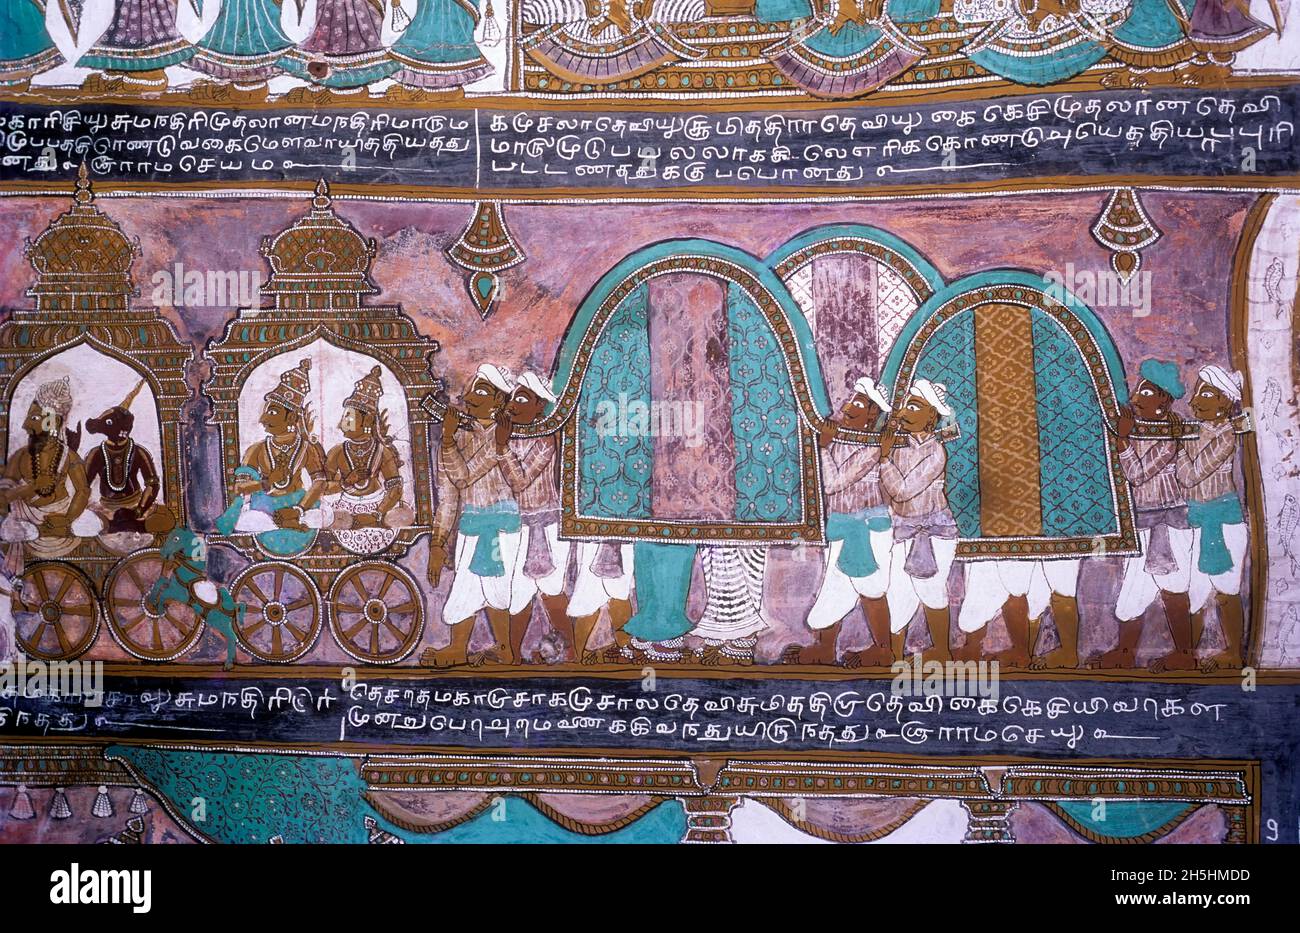 400 years old Ramayana painting at Alagar koyil near Madurai, Tamil Nadu, India. Queens Kausalya, Sumitra and Kaikeyi following king Dasharatha in Stock Photo